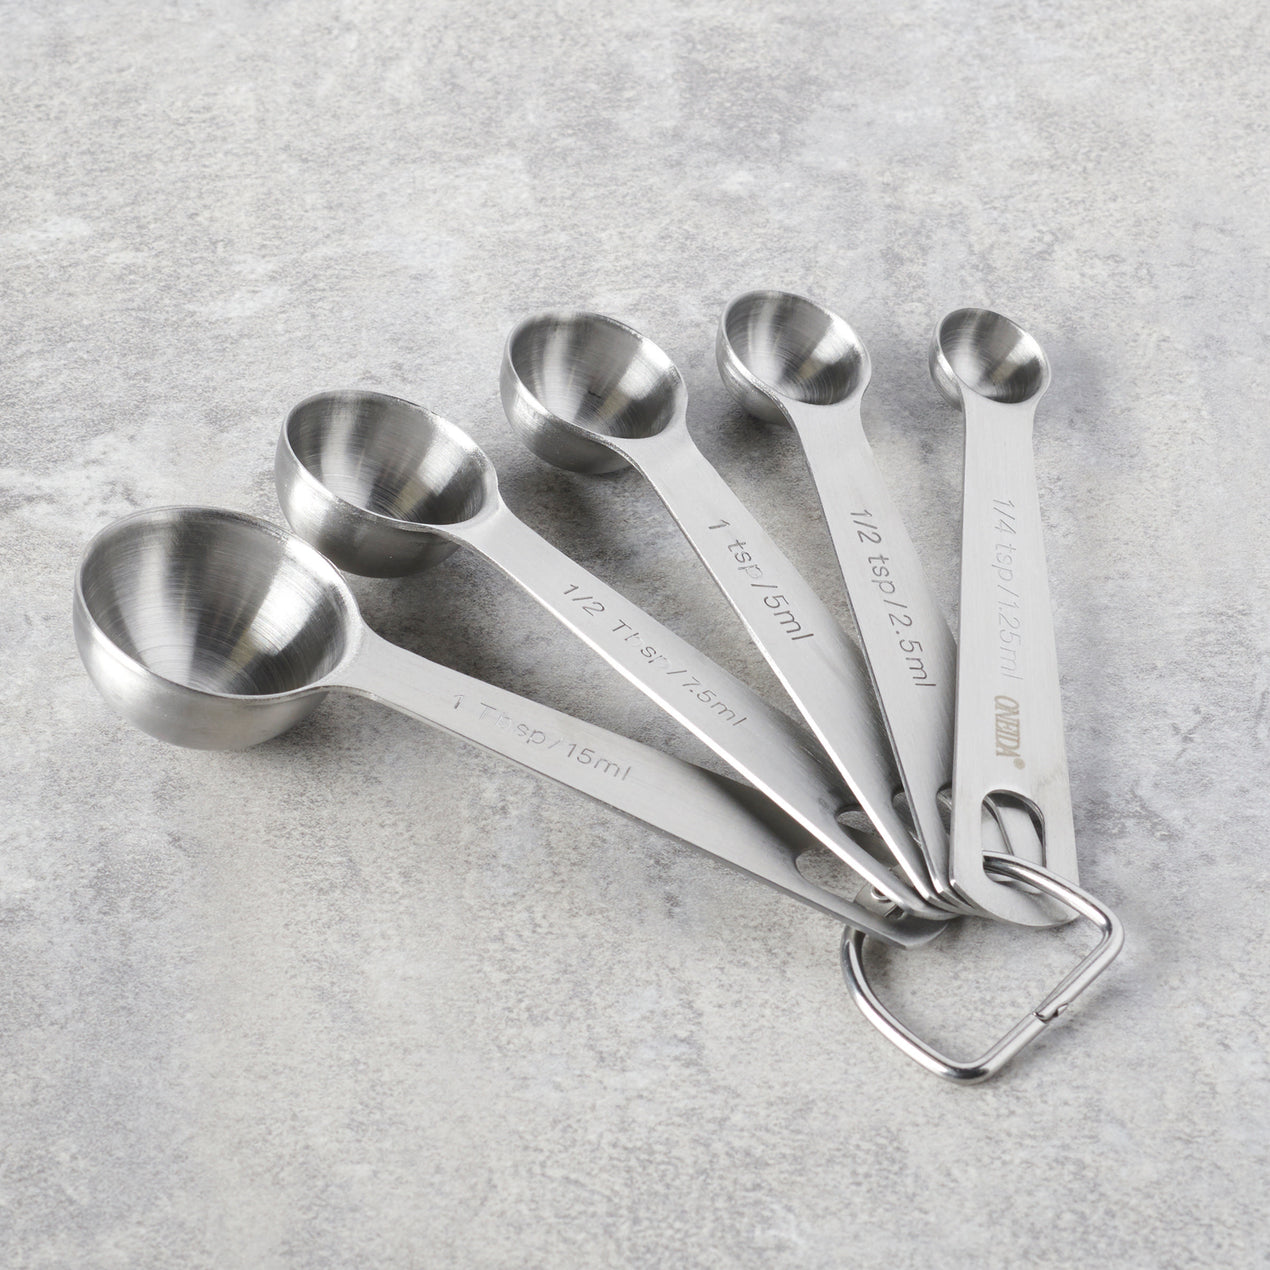 Stainless Steel 4 piece Measuring Spoon Set